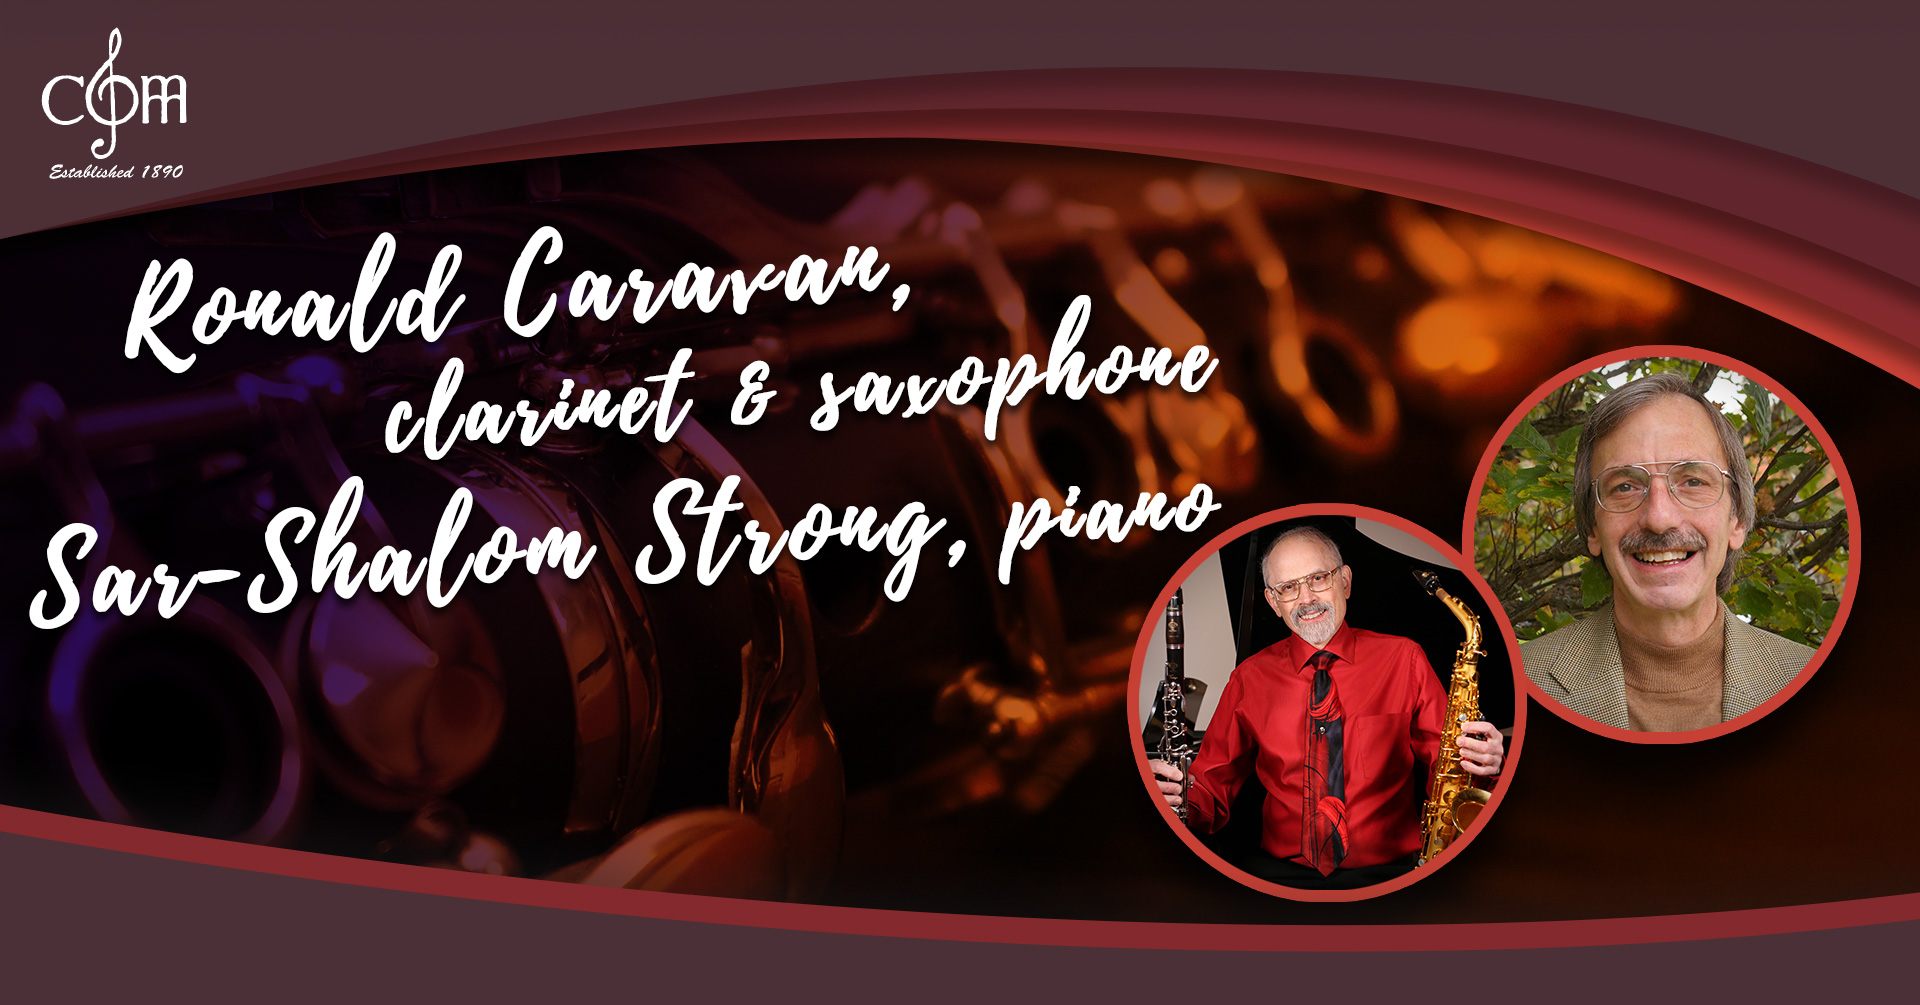 Ronald Caravan, saxophone & clarinet; Sar-Shalom Strong, piano